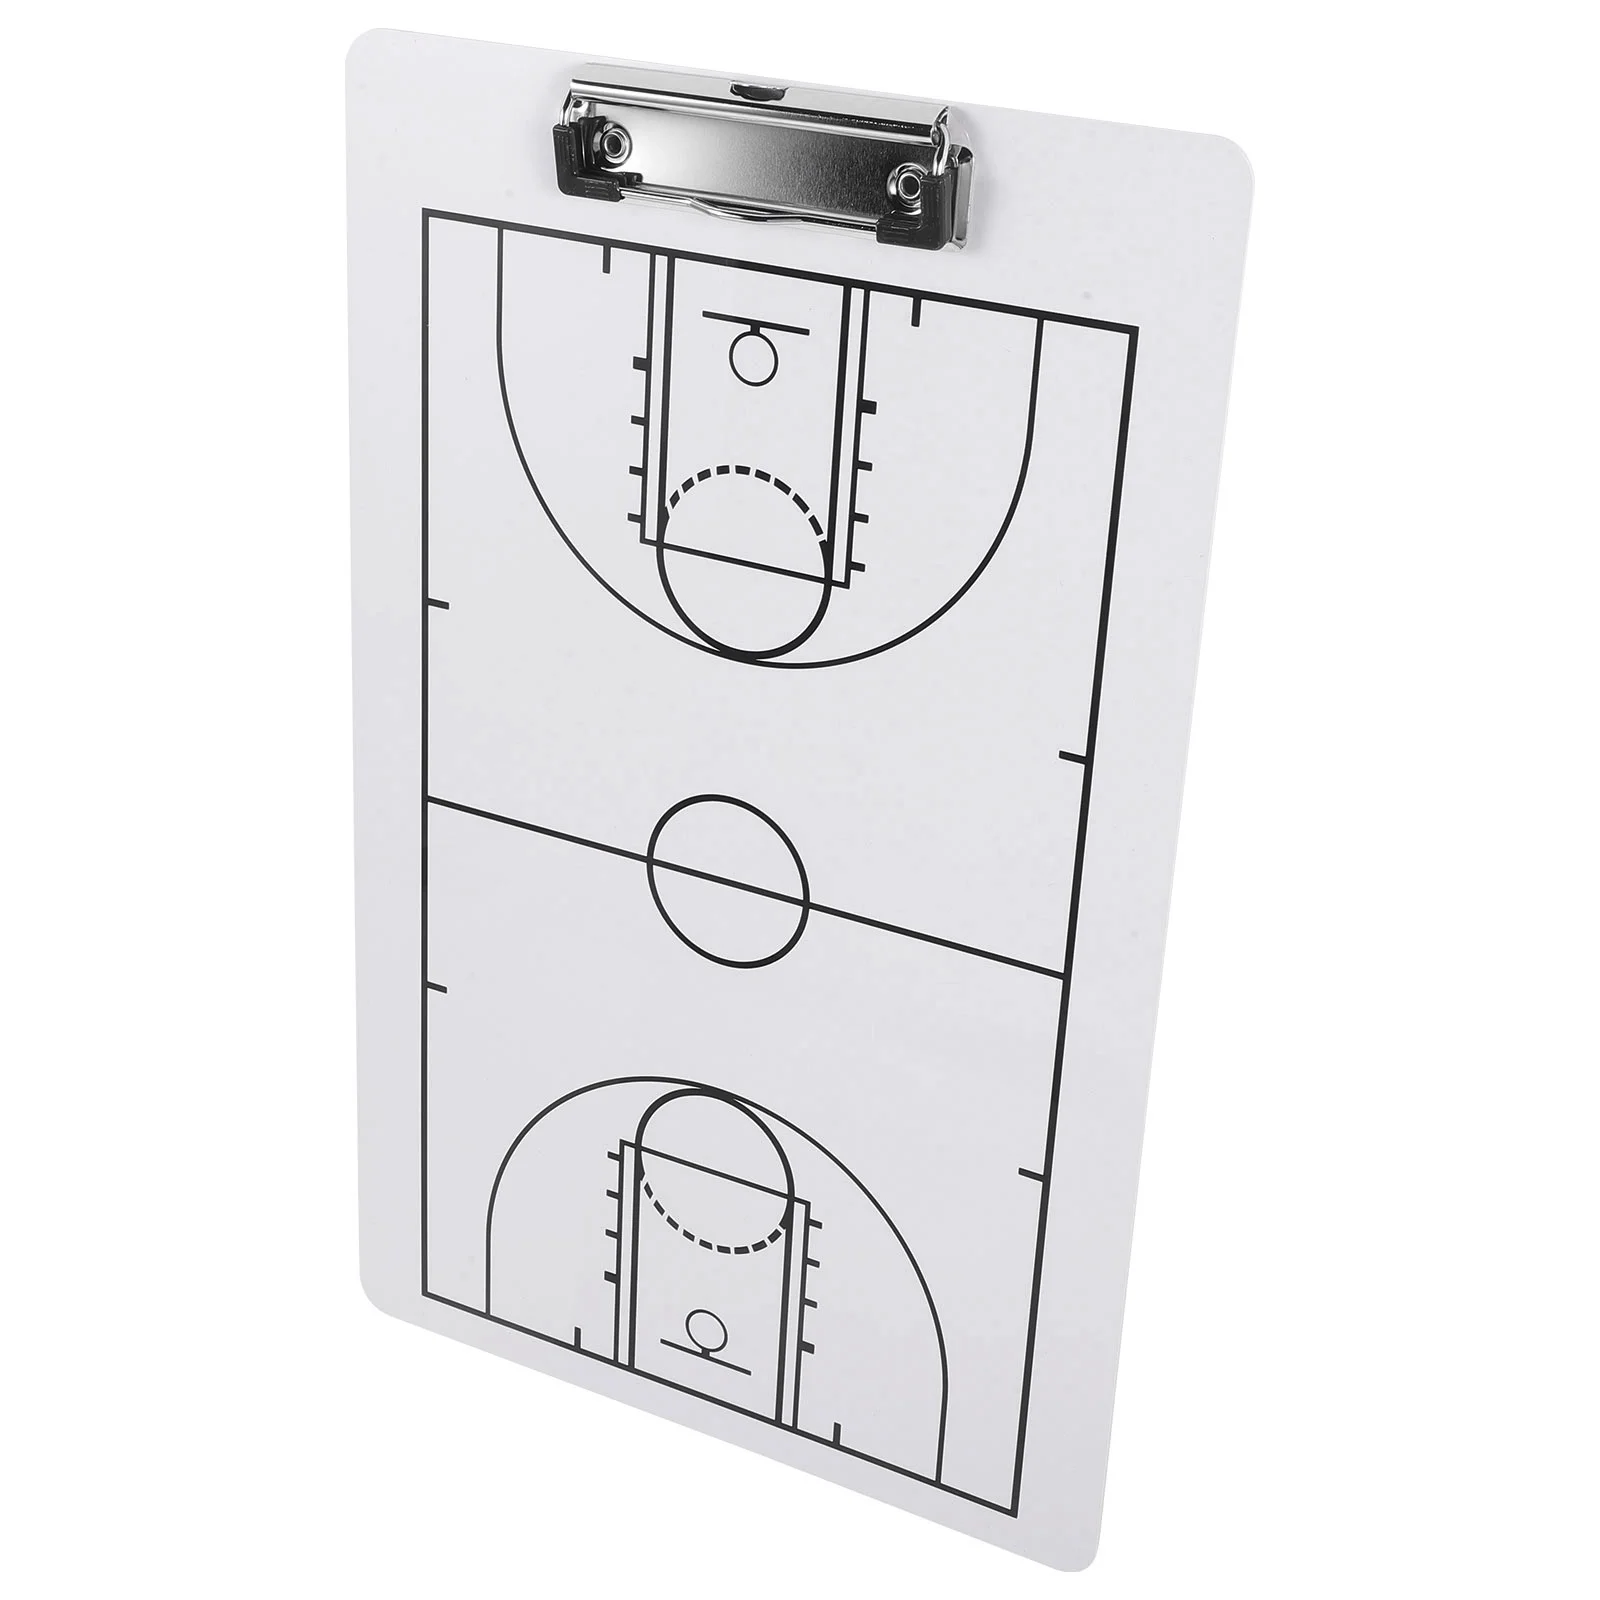 

Basketball Board Whiteboard Accessories Match Equipment Writing Tactics Pvc Training Office Outdoor Coaching Supplies